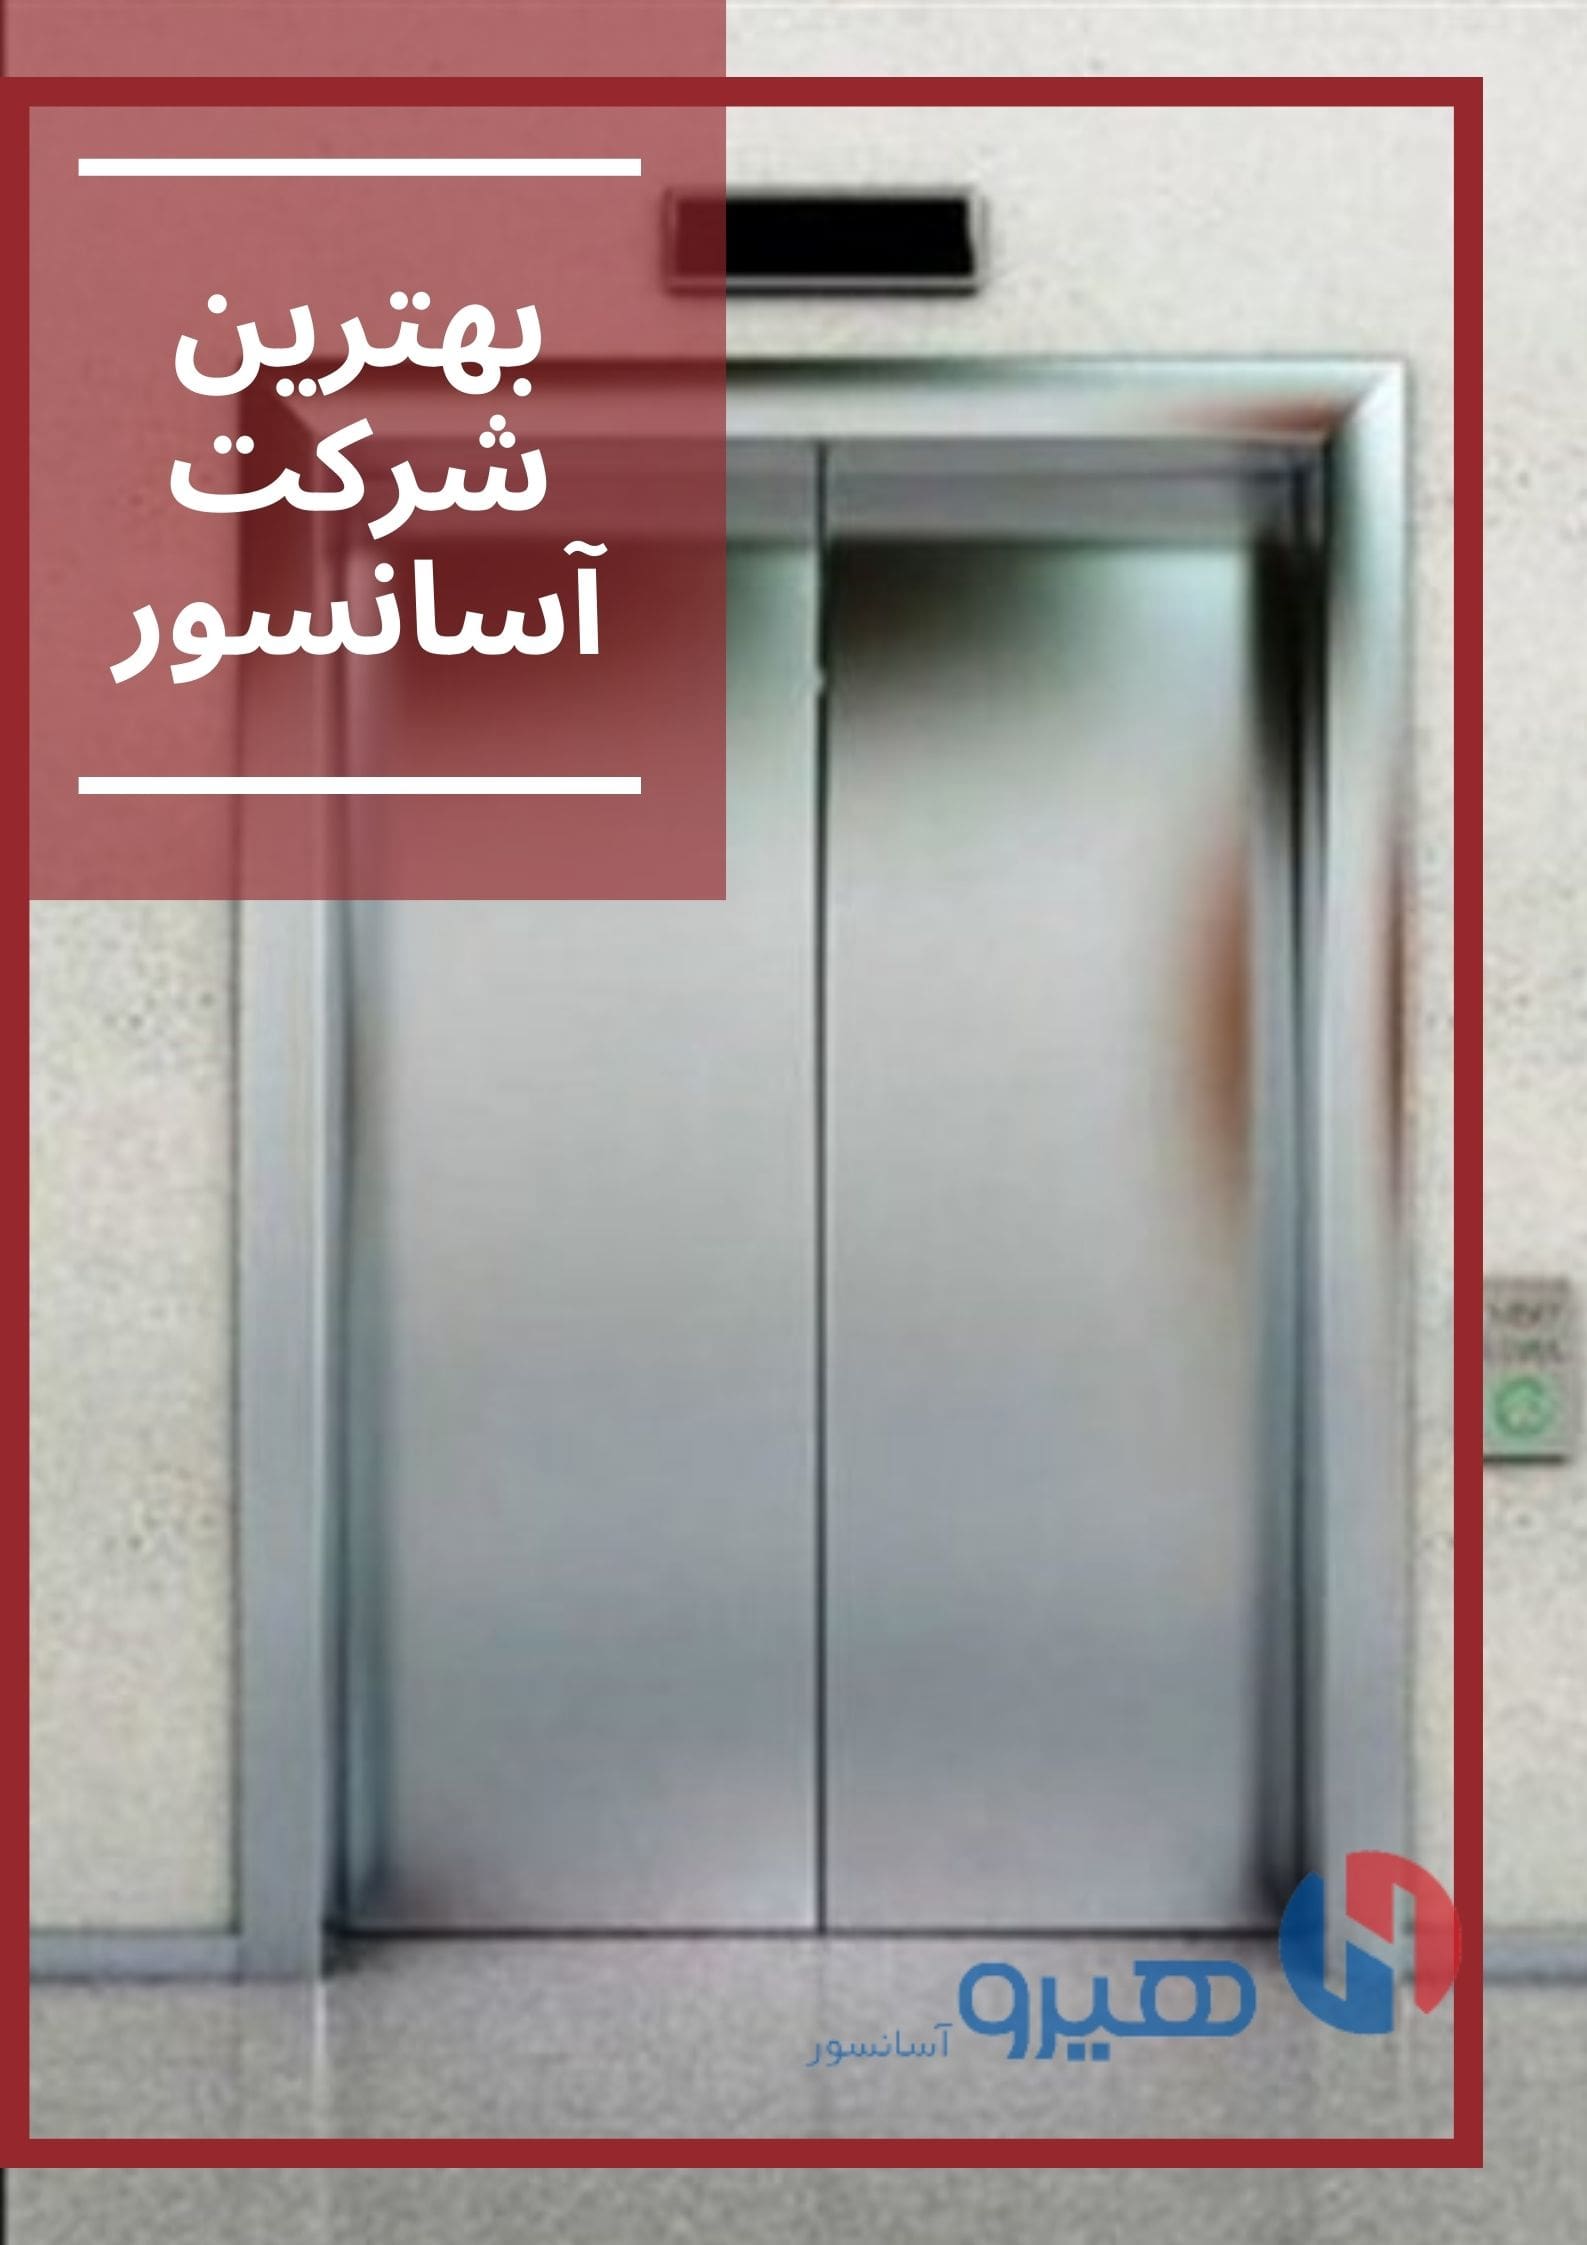 بهترین شرکت آسانسور - هیرو آساسور